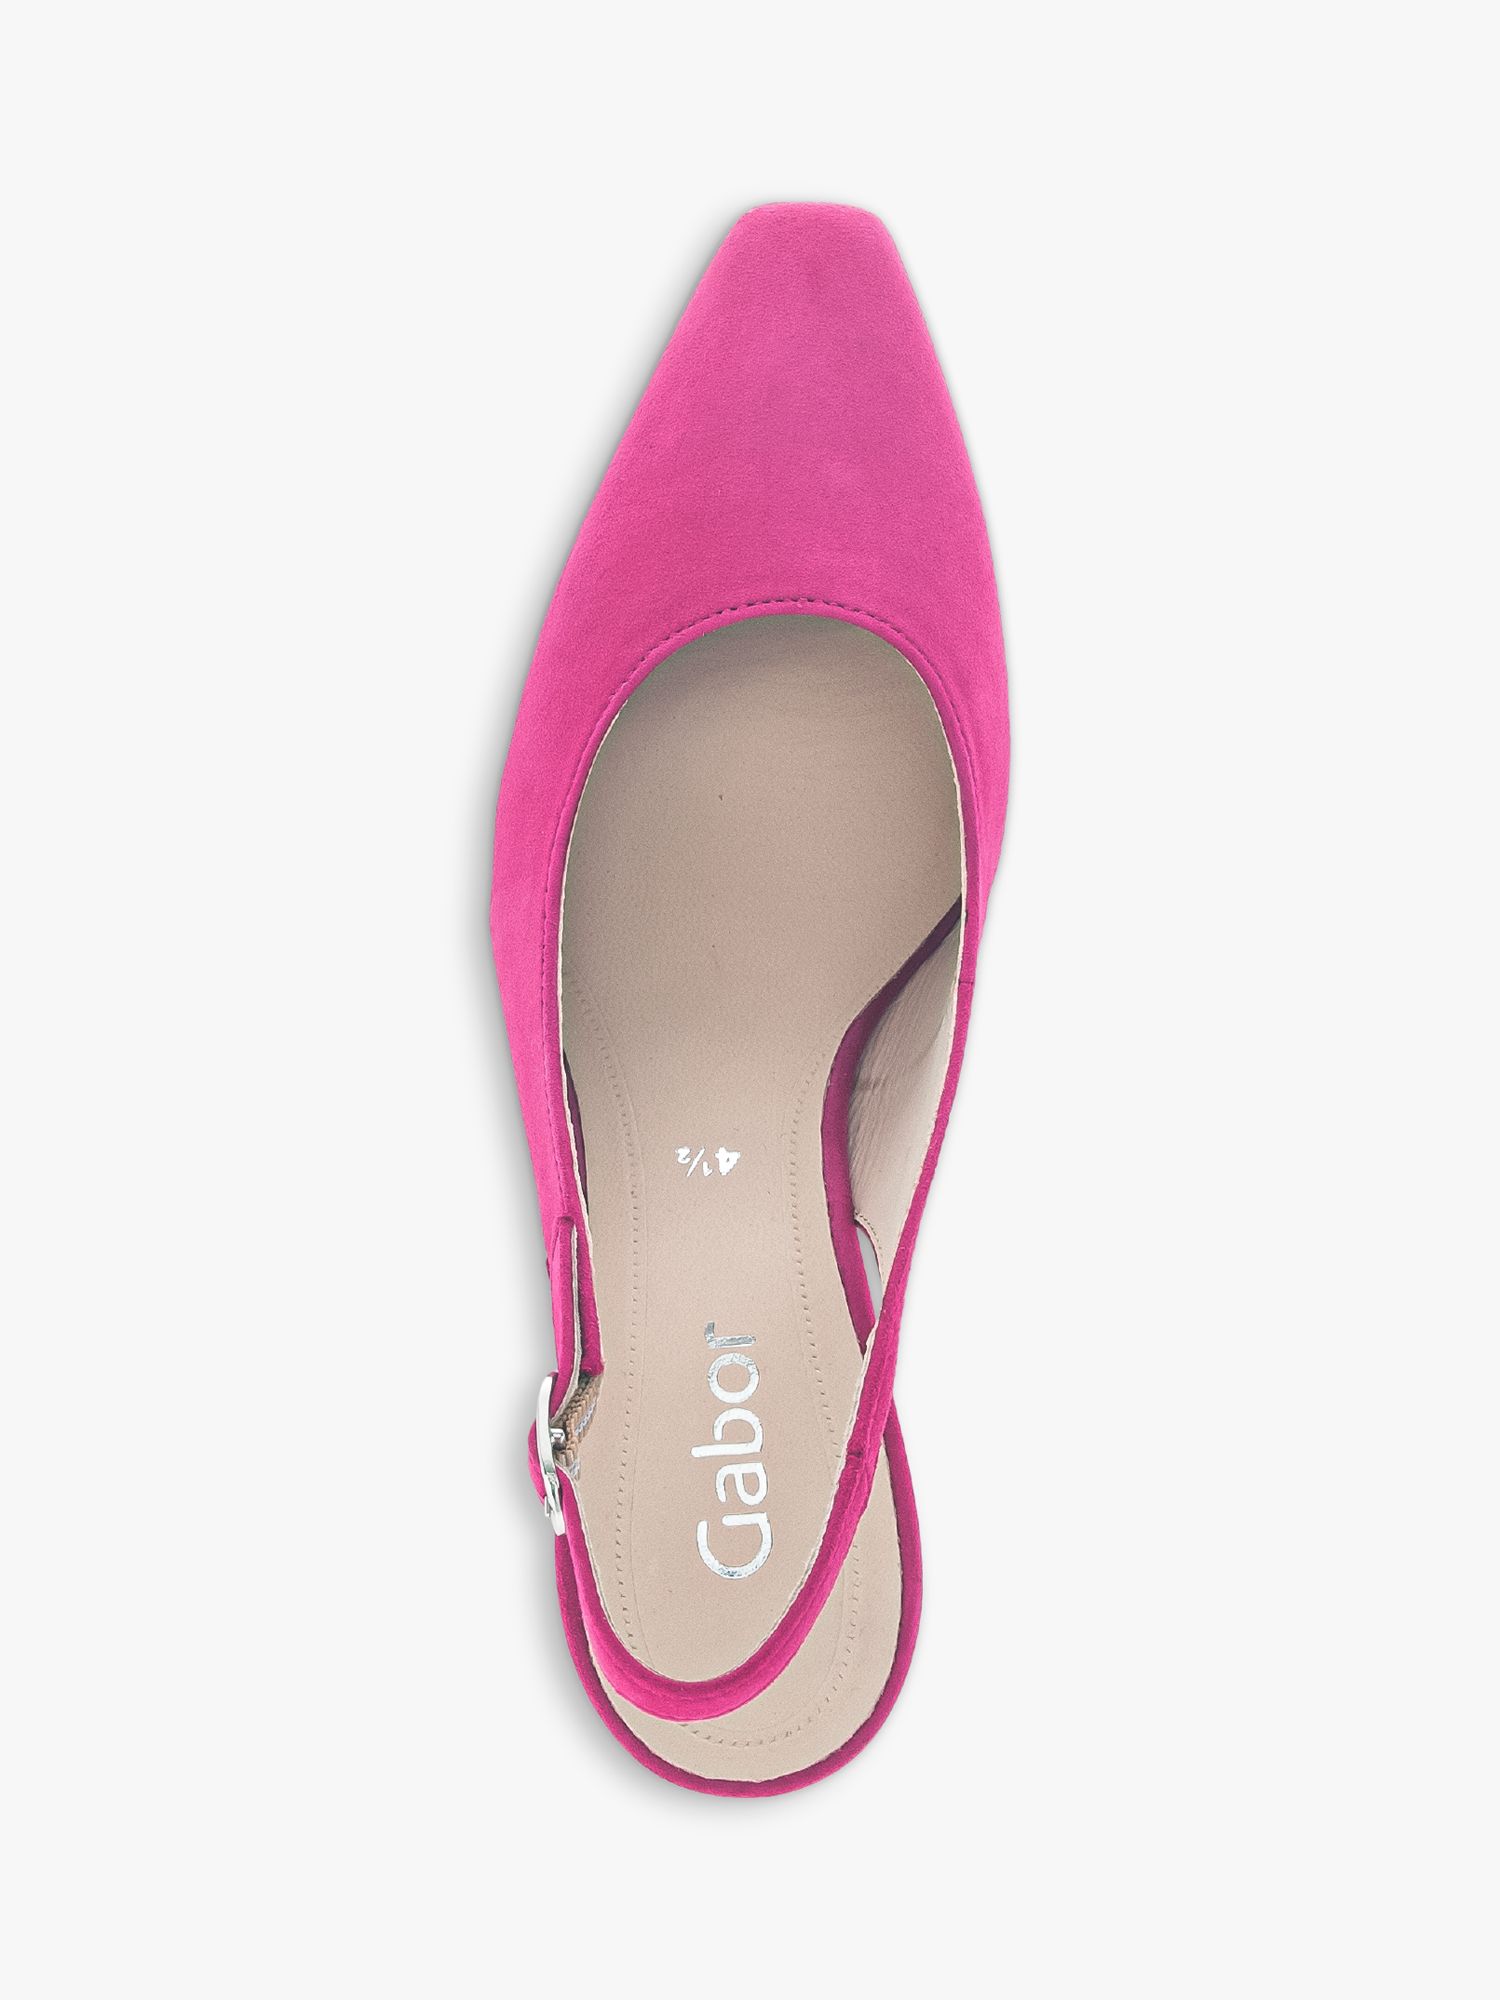 Gabor Lindy Slingback Kitten Heel Shoes, Pink, 3